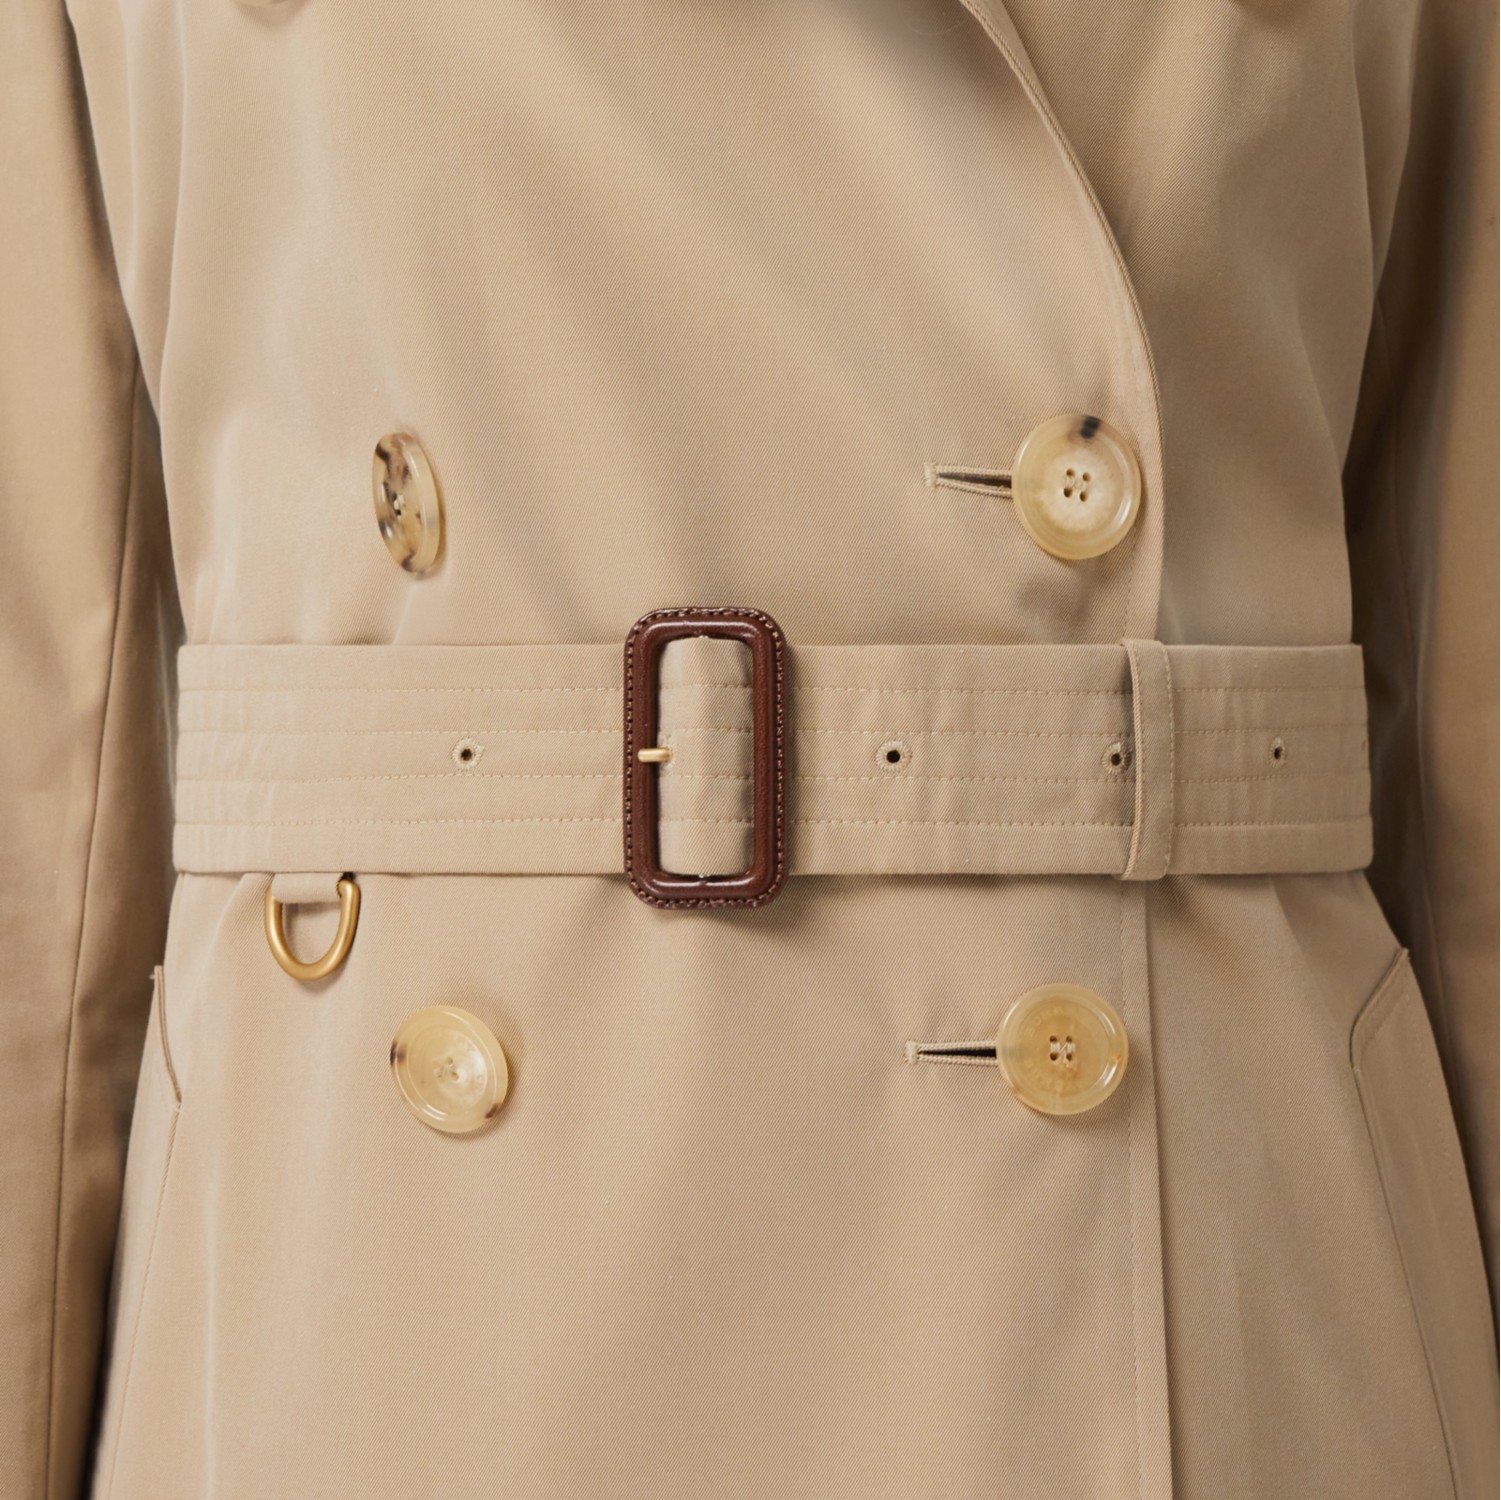 Burberry Women's The Mid-Length Kensington Heritage Trench Coat